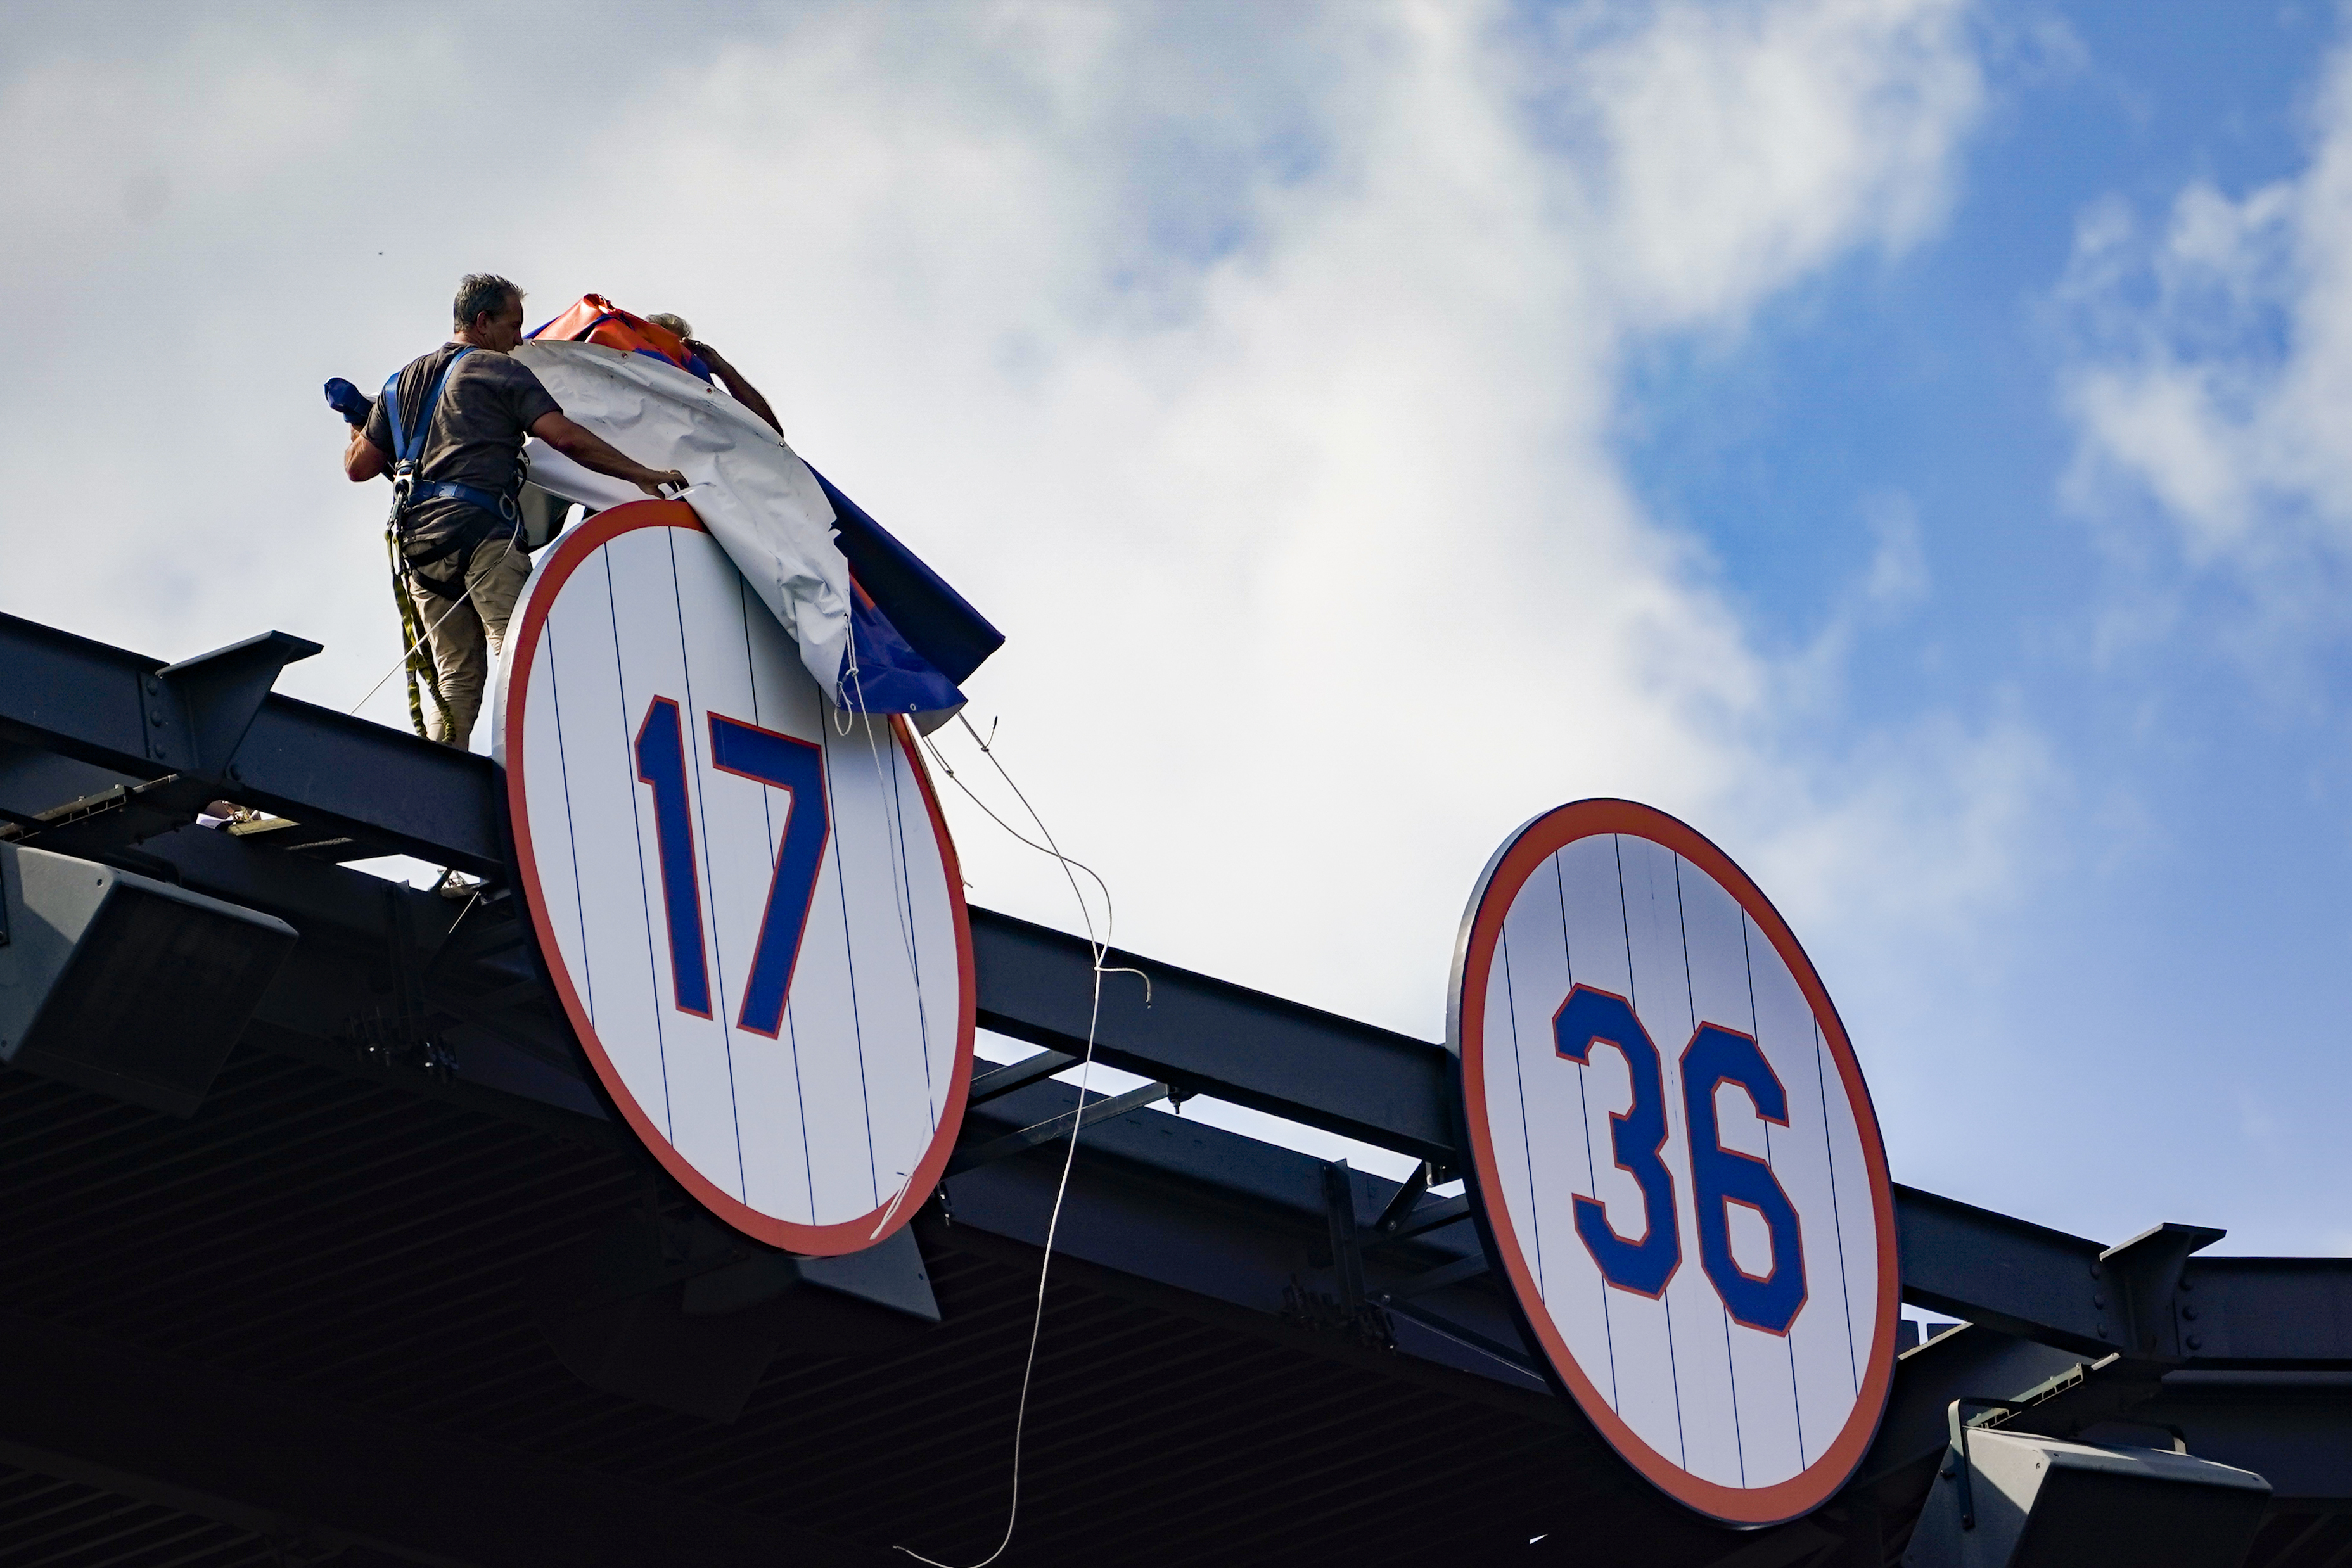 Mets retire No. 17 in pre-game ceremony honoring Keith Hernandez